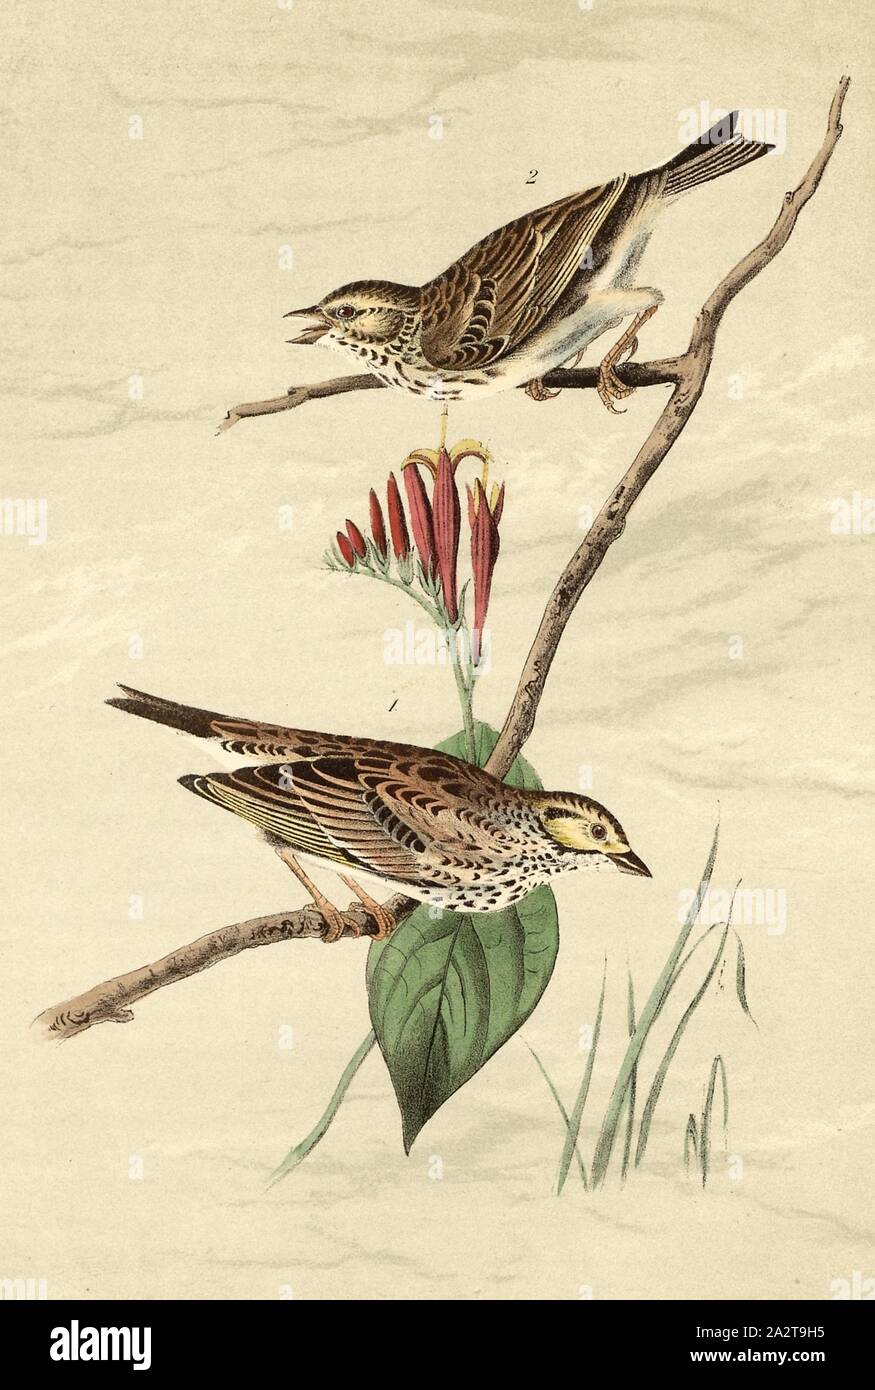 Savannah Bunting - Indian Pink-root, Spigelea Marilandica, Ammer (Emberiza Savanna), Signed: J.J. Audubon, J.T. Bowen, lithograph, Pl. 160 (vol. 3), Audubon, John James (drawn); Bowen, J. T. (lith.), 1856, John James Audubon: The birds of America: from drawings made in the United States and their territories. New York: Audubon, 1856 Stock Photo